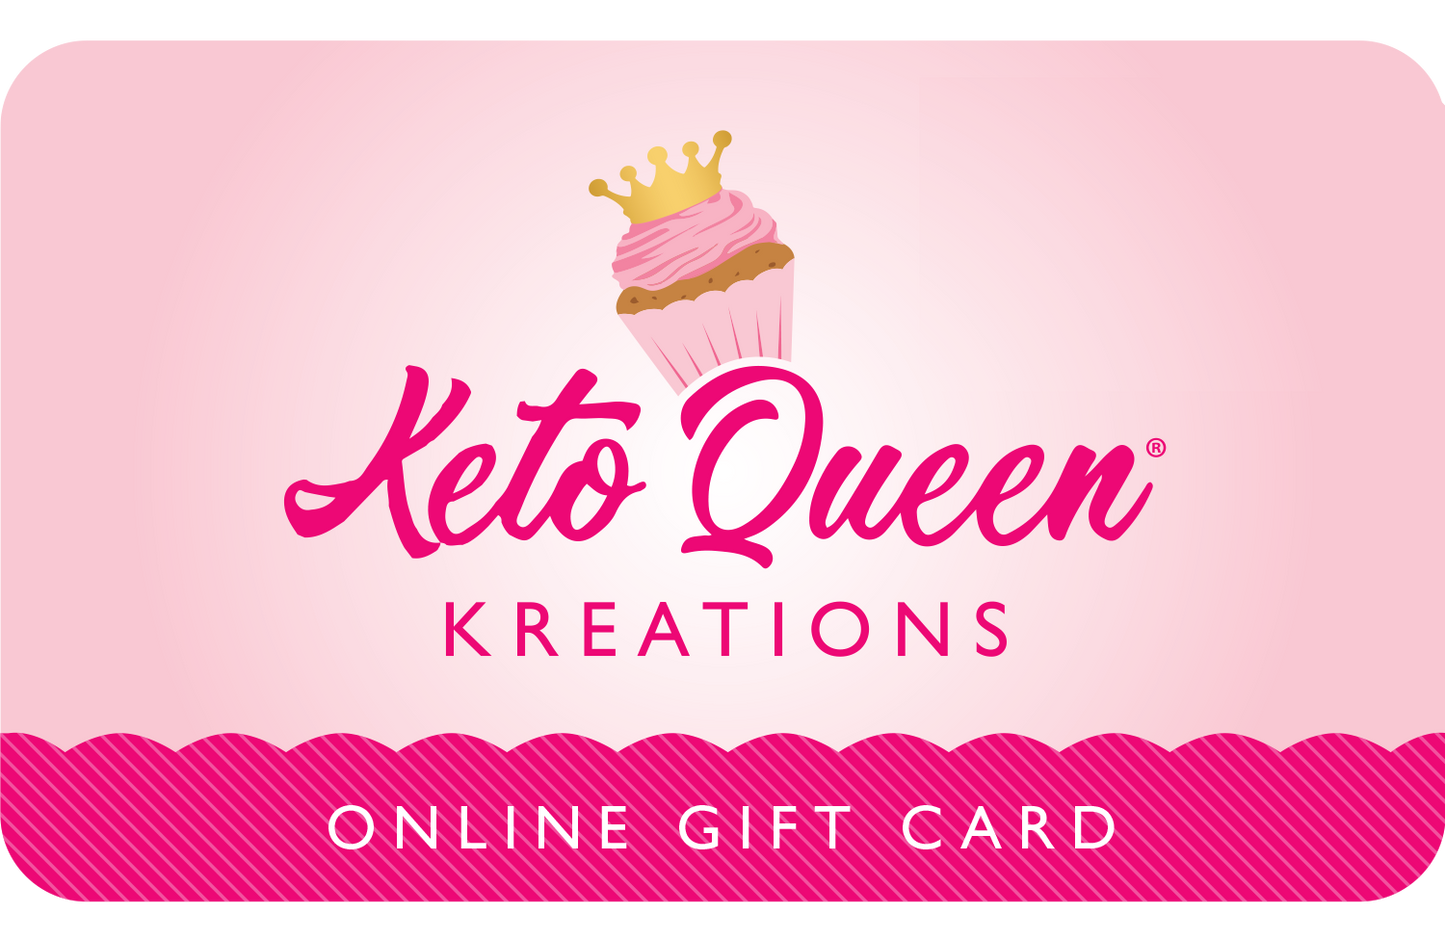 Keto Queen Gift Cards